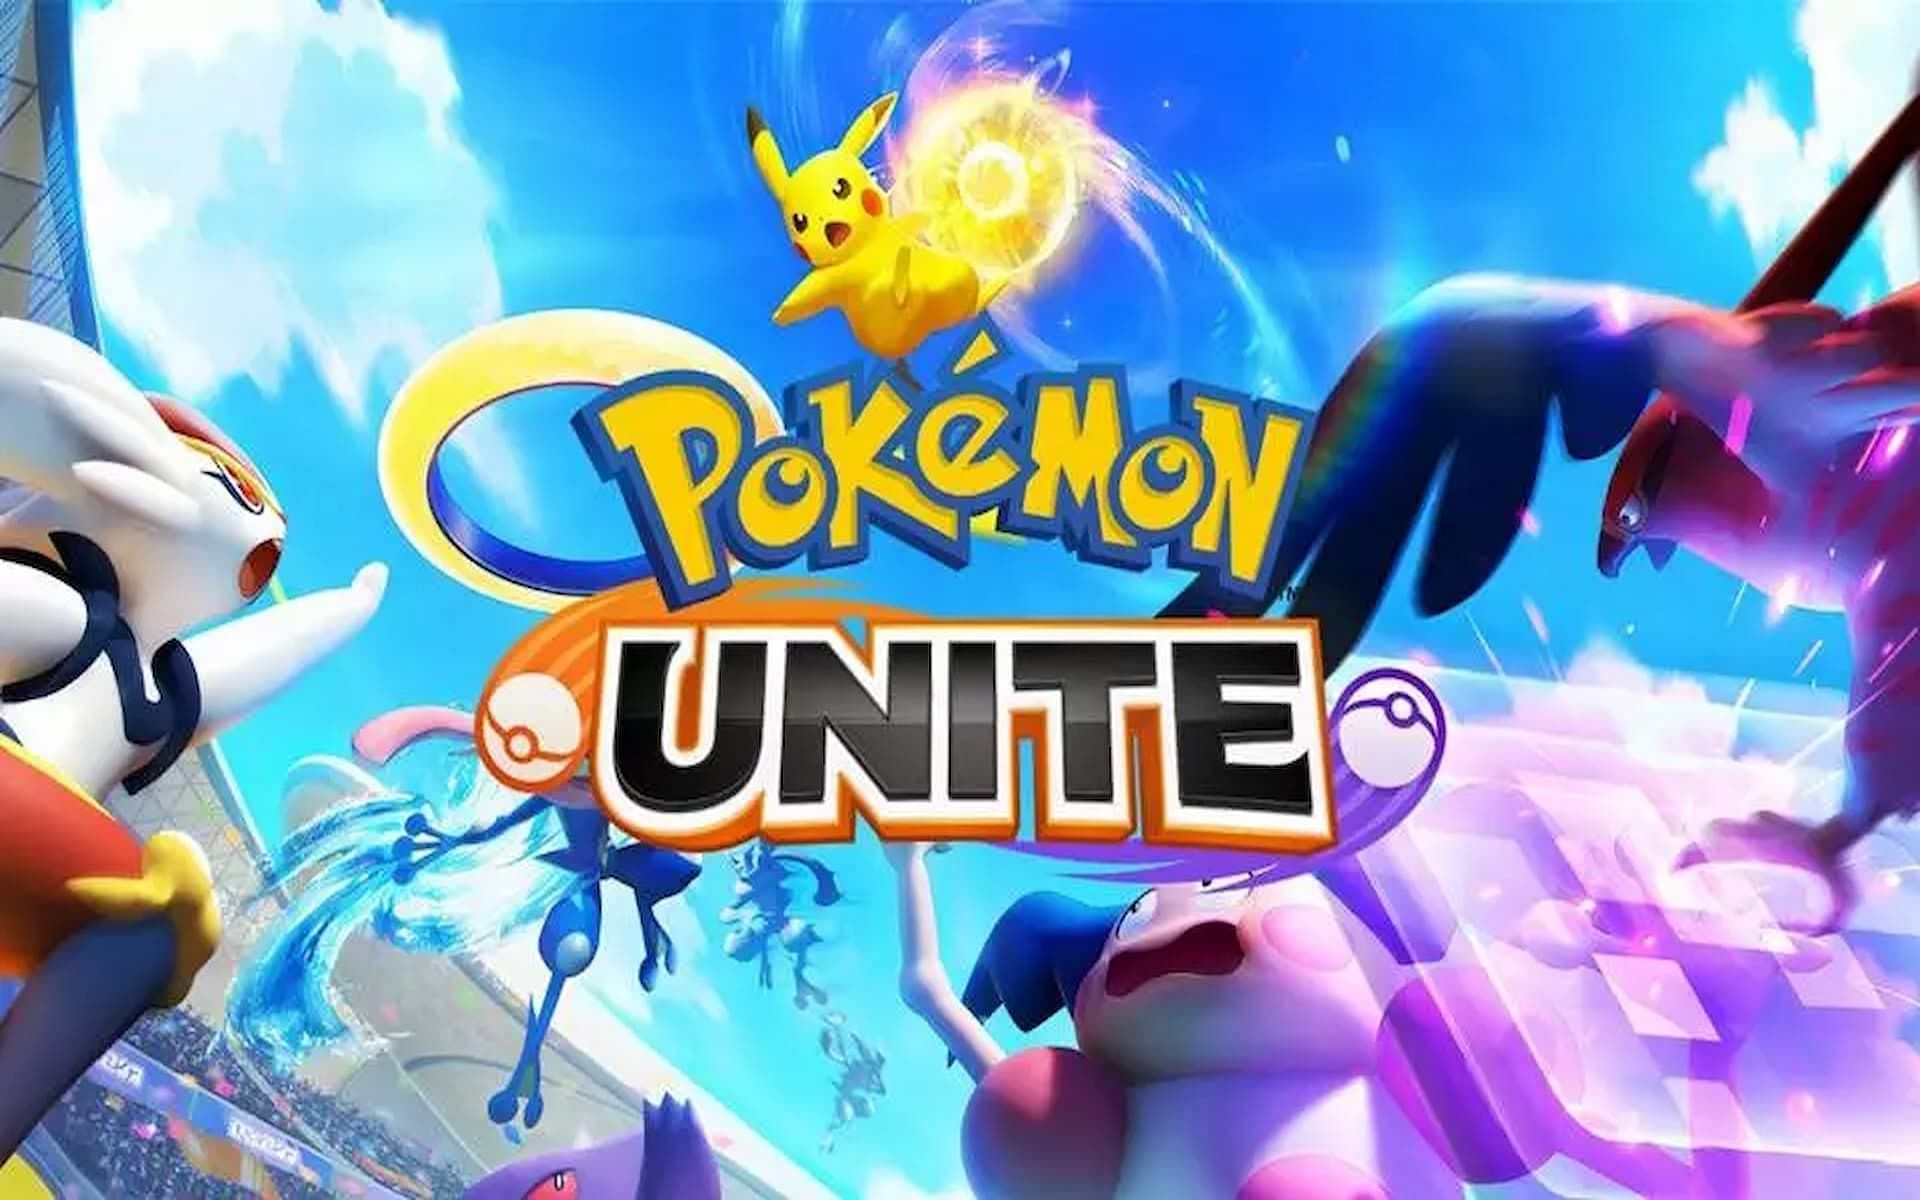 A promotional image for Pokemon Unite (Image via The Pokemon Company)